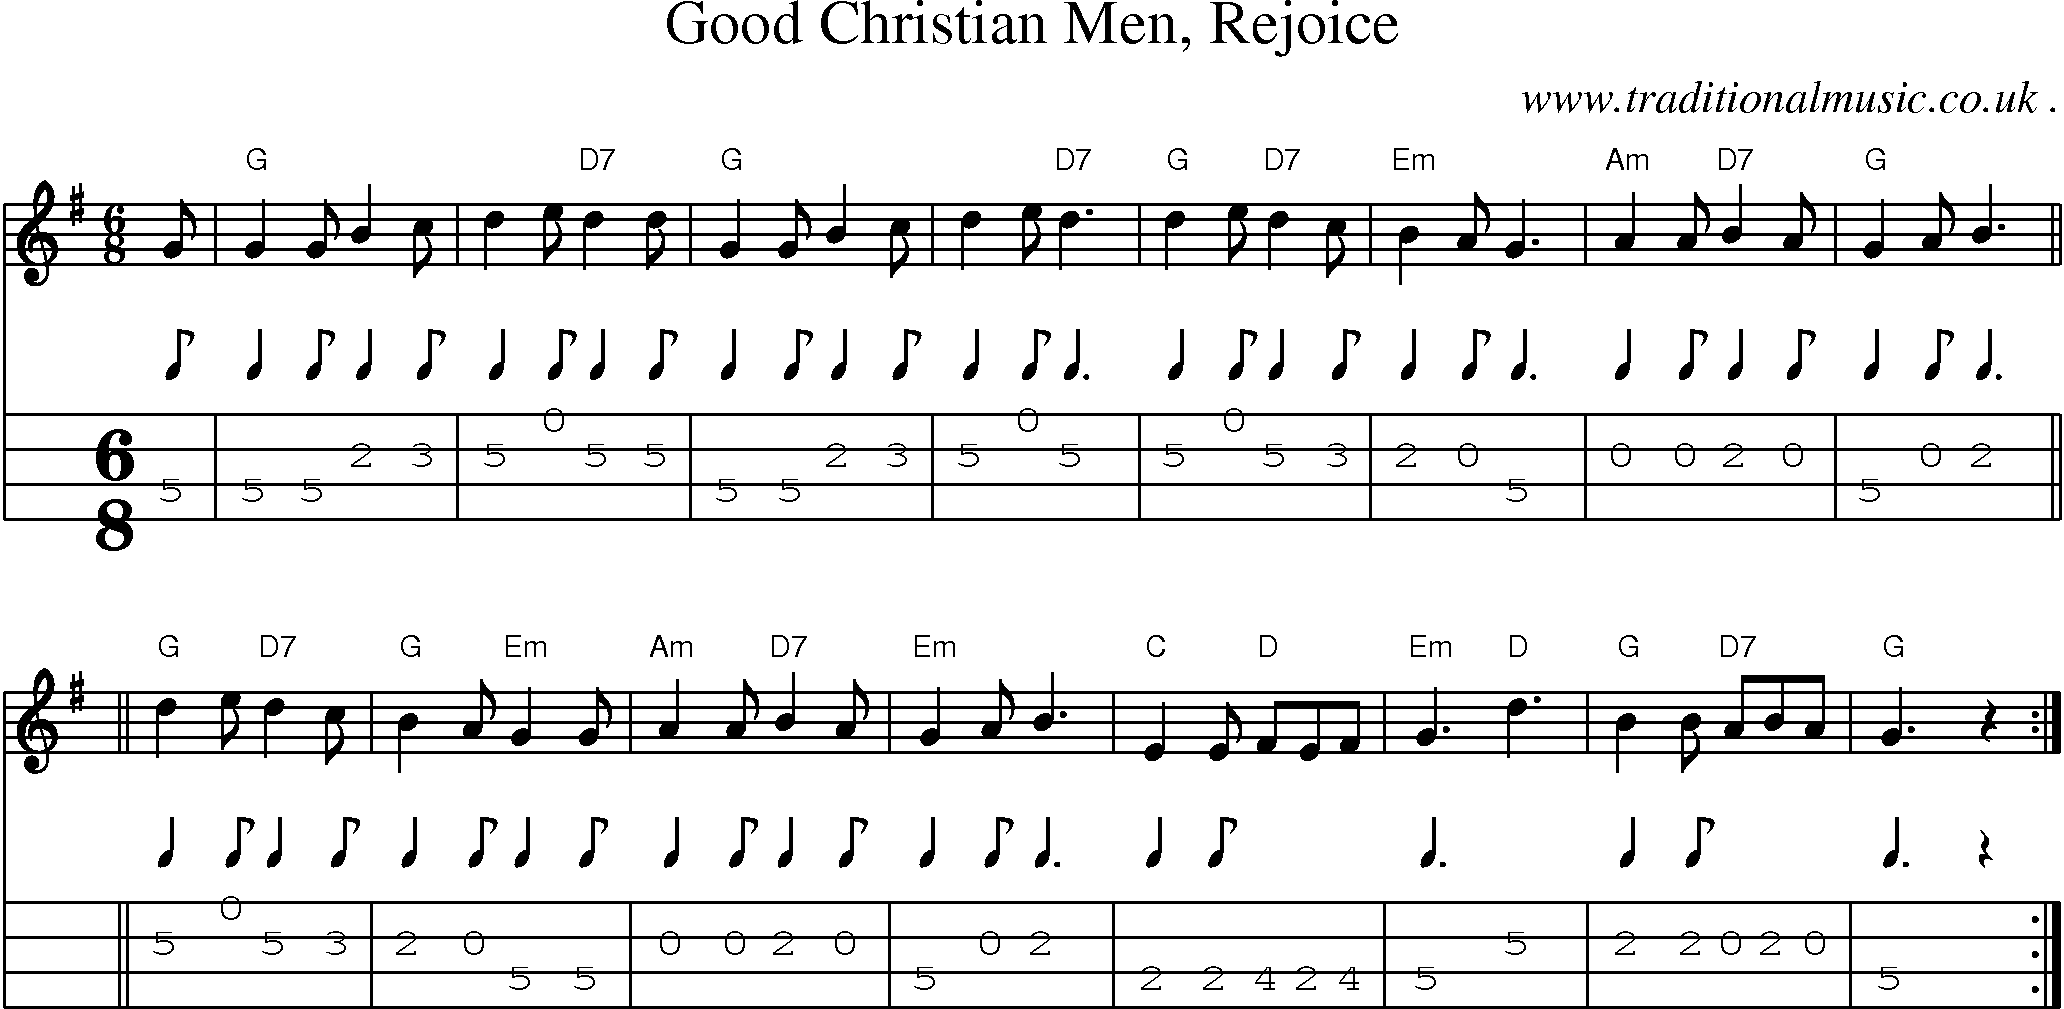 Sheet-music  score, Chords and Mandolin Tabs for Good Christian Men Rejoice